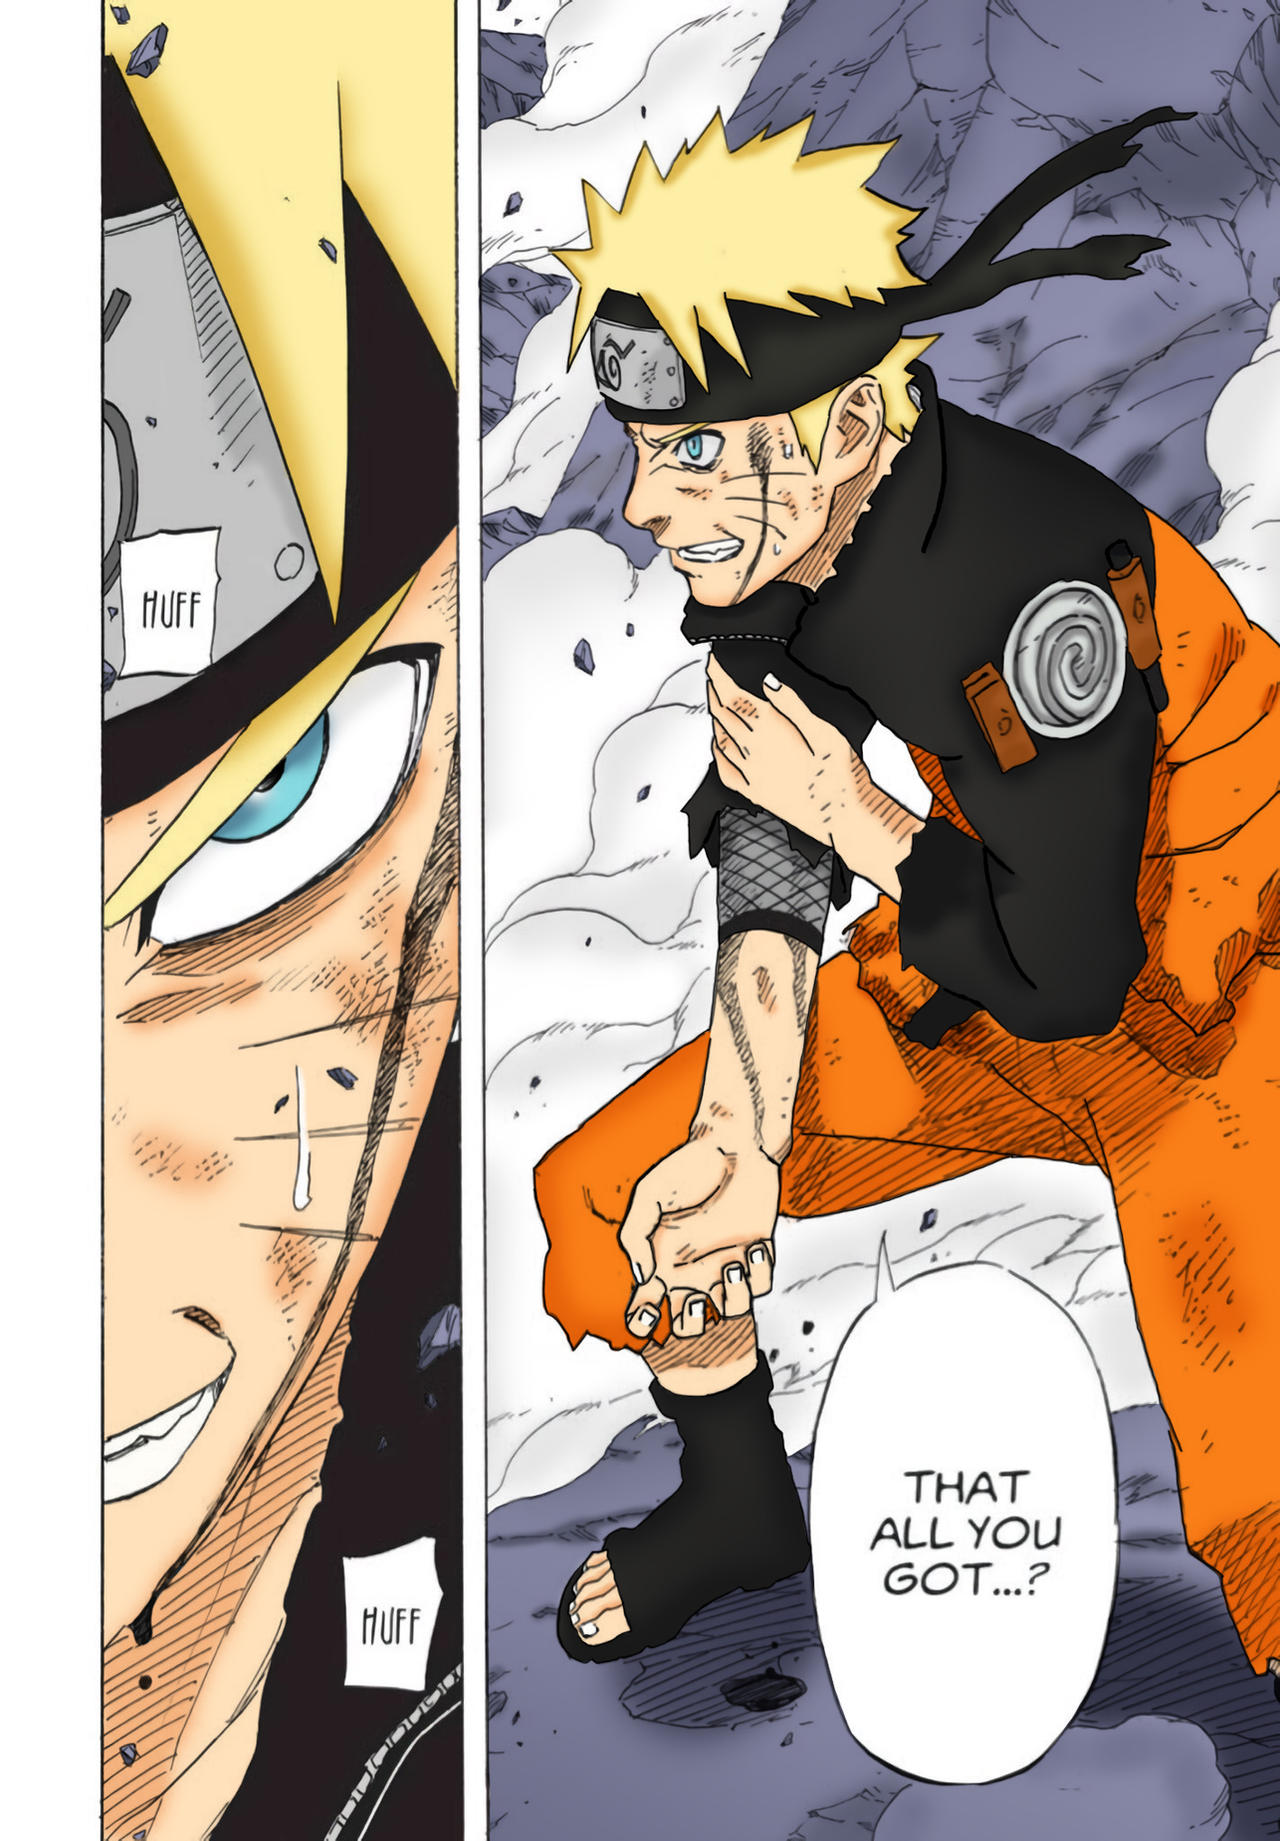 Naruto manga coloring test by JorgeADesigner on DeviantArt